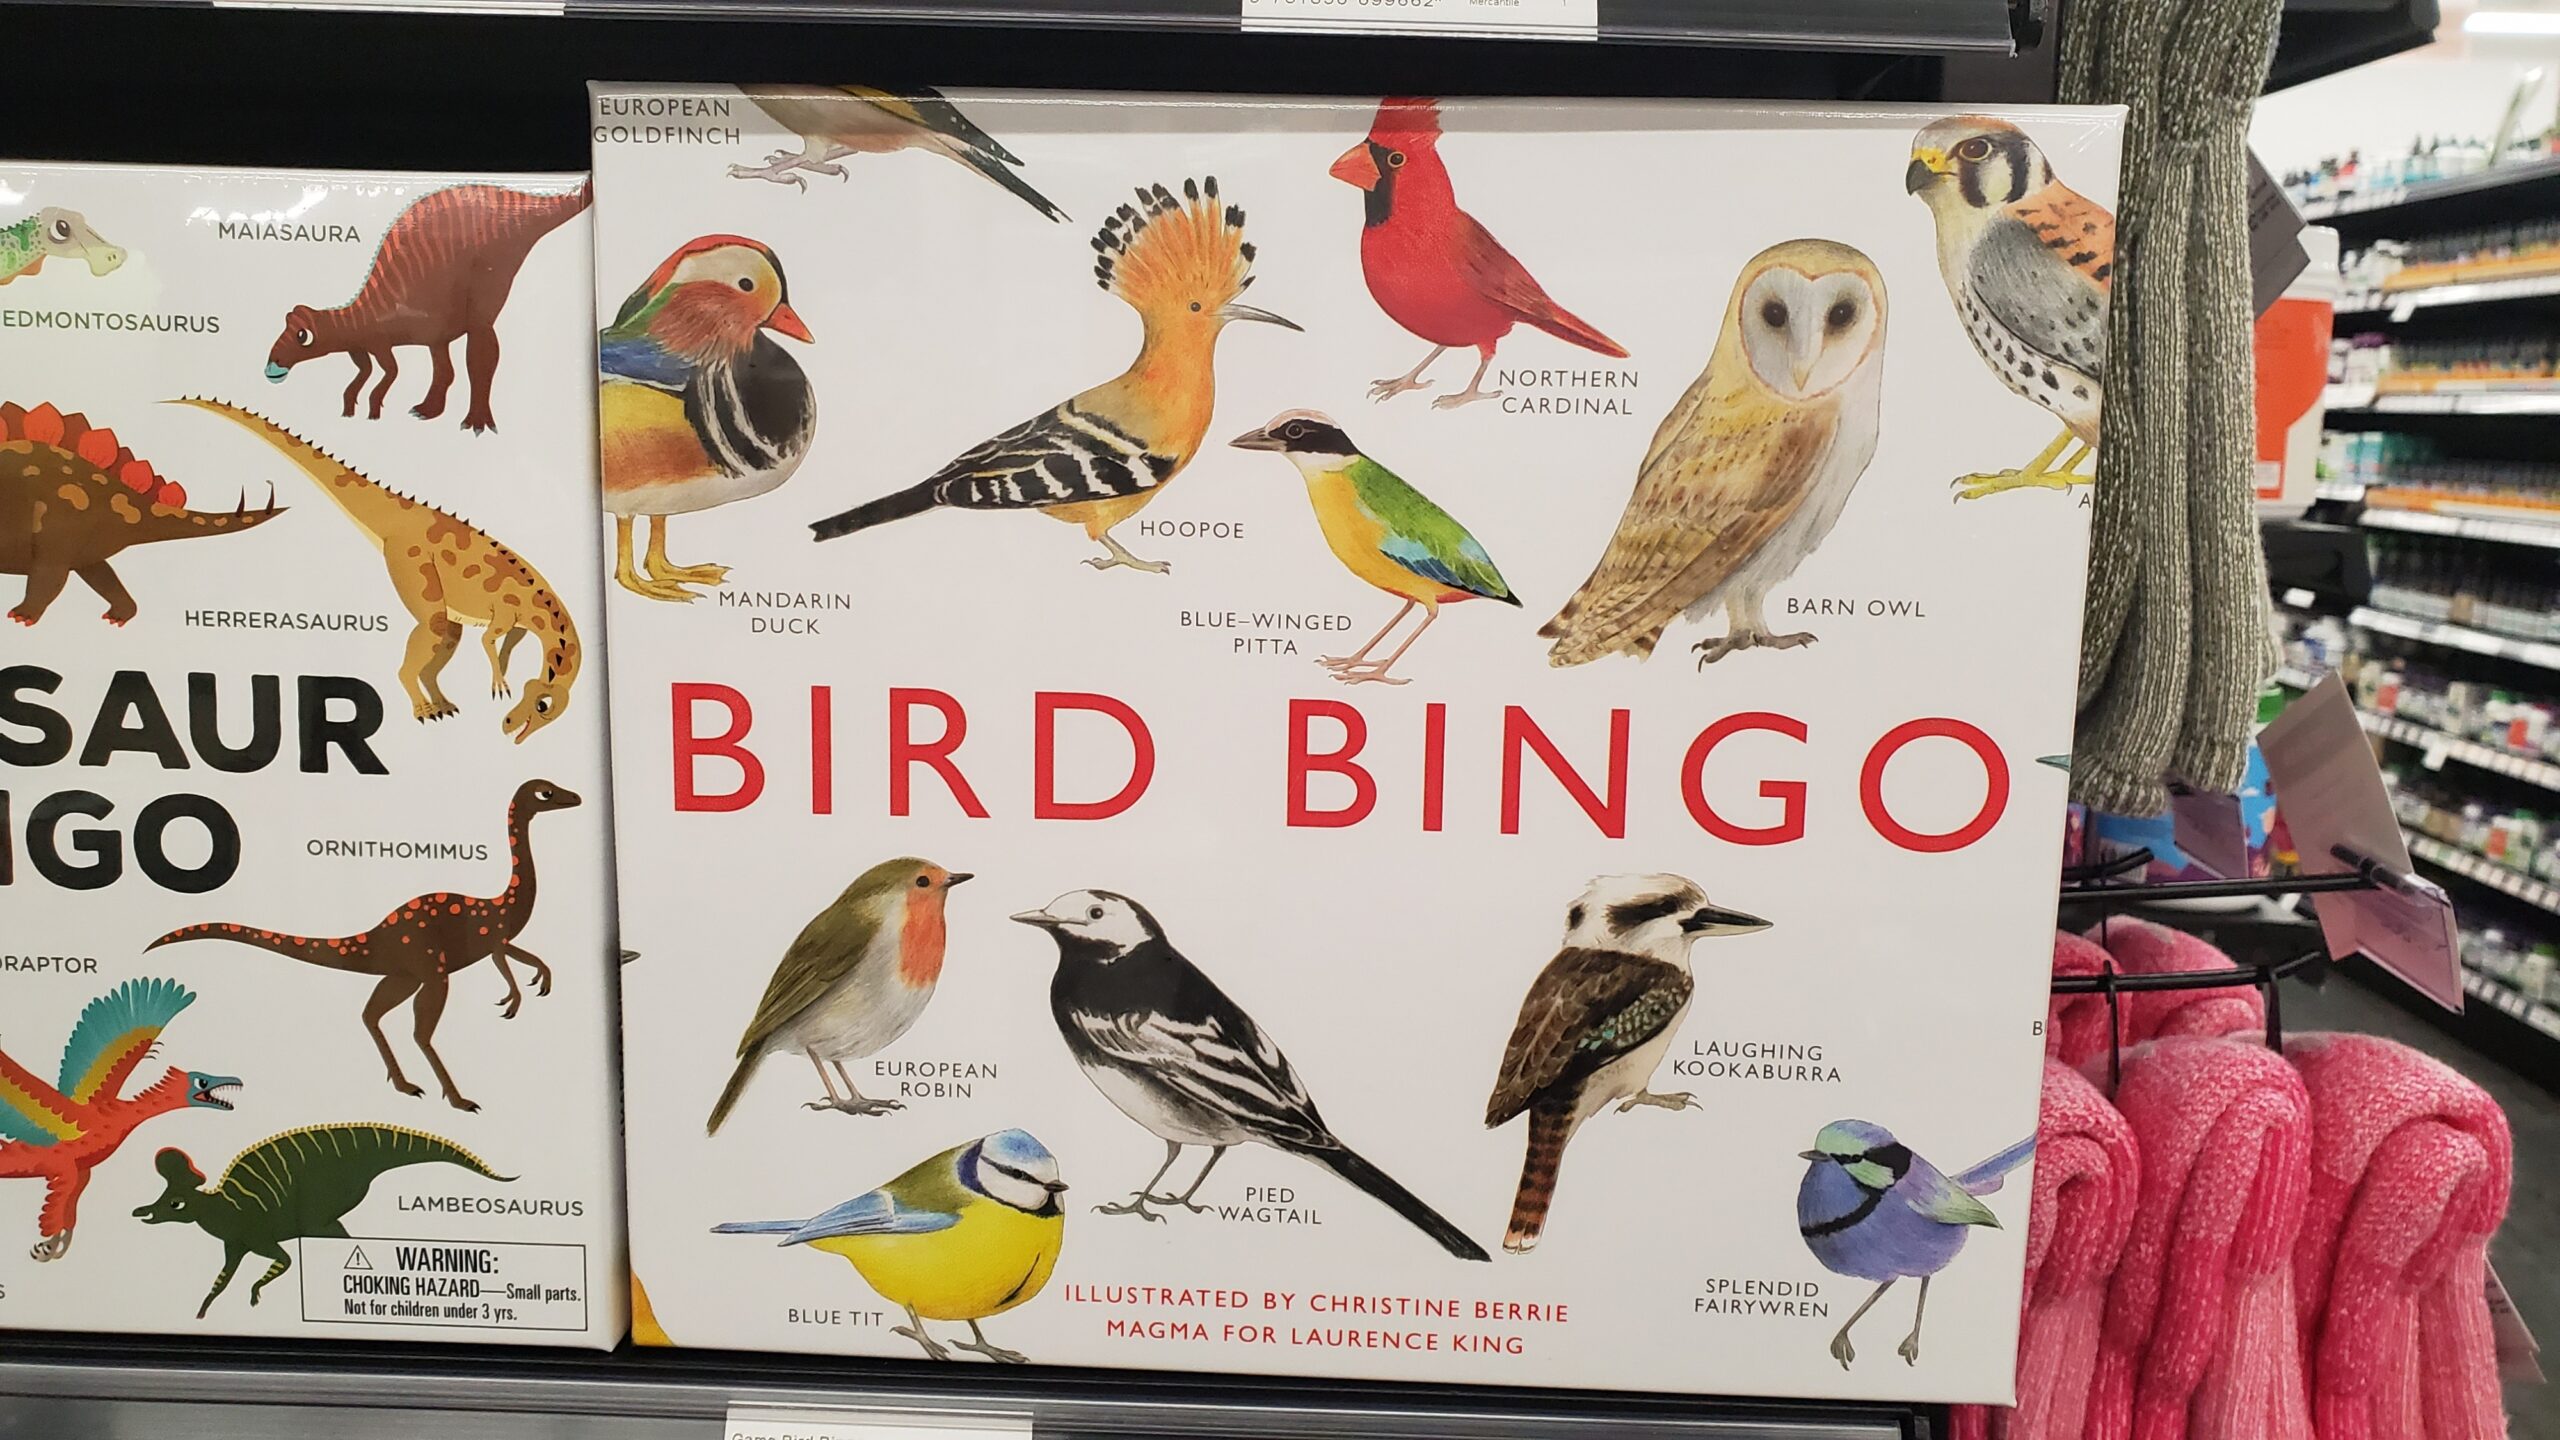 Bird Bingo is an optional gift that will entertain generations